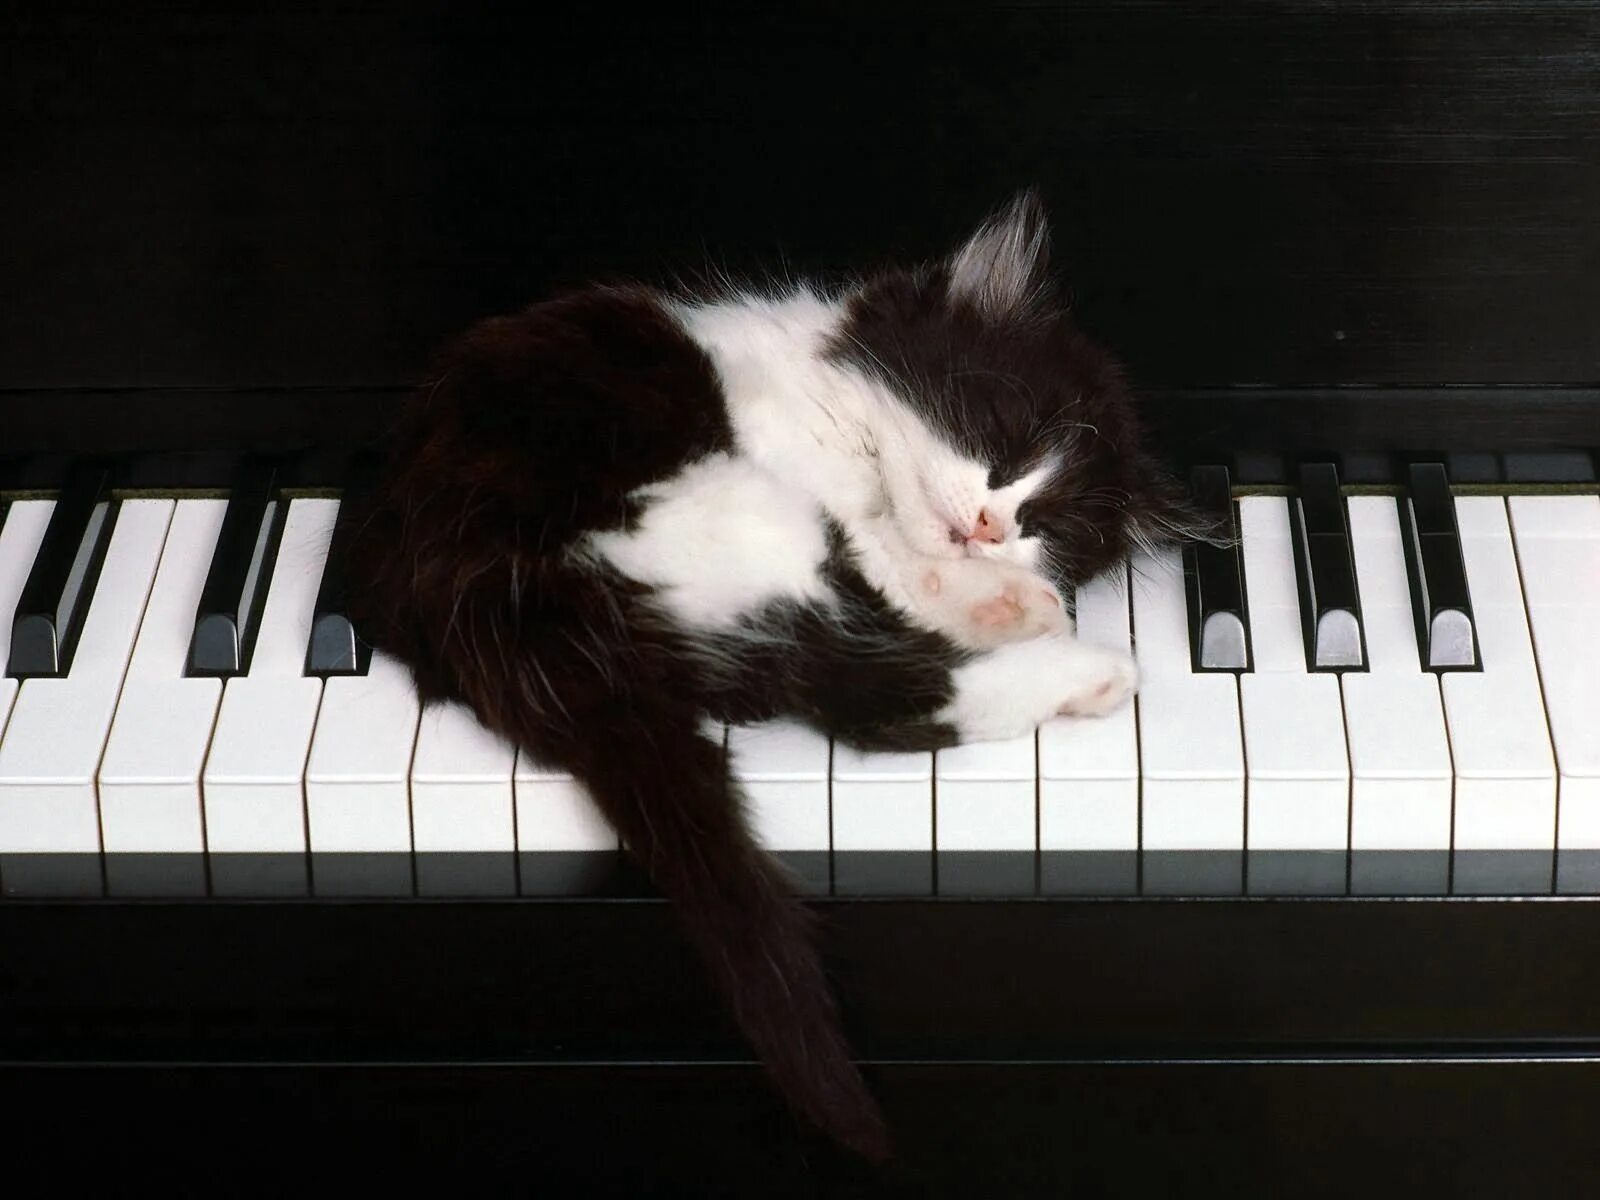 Animal dream. Кот на пианино. Котьна пианино. Кошка на пианино. Пианино «котёнок».